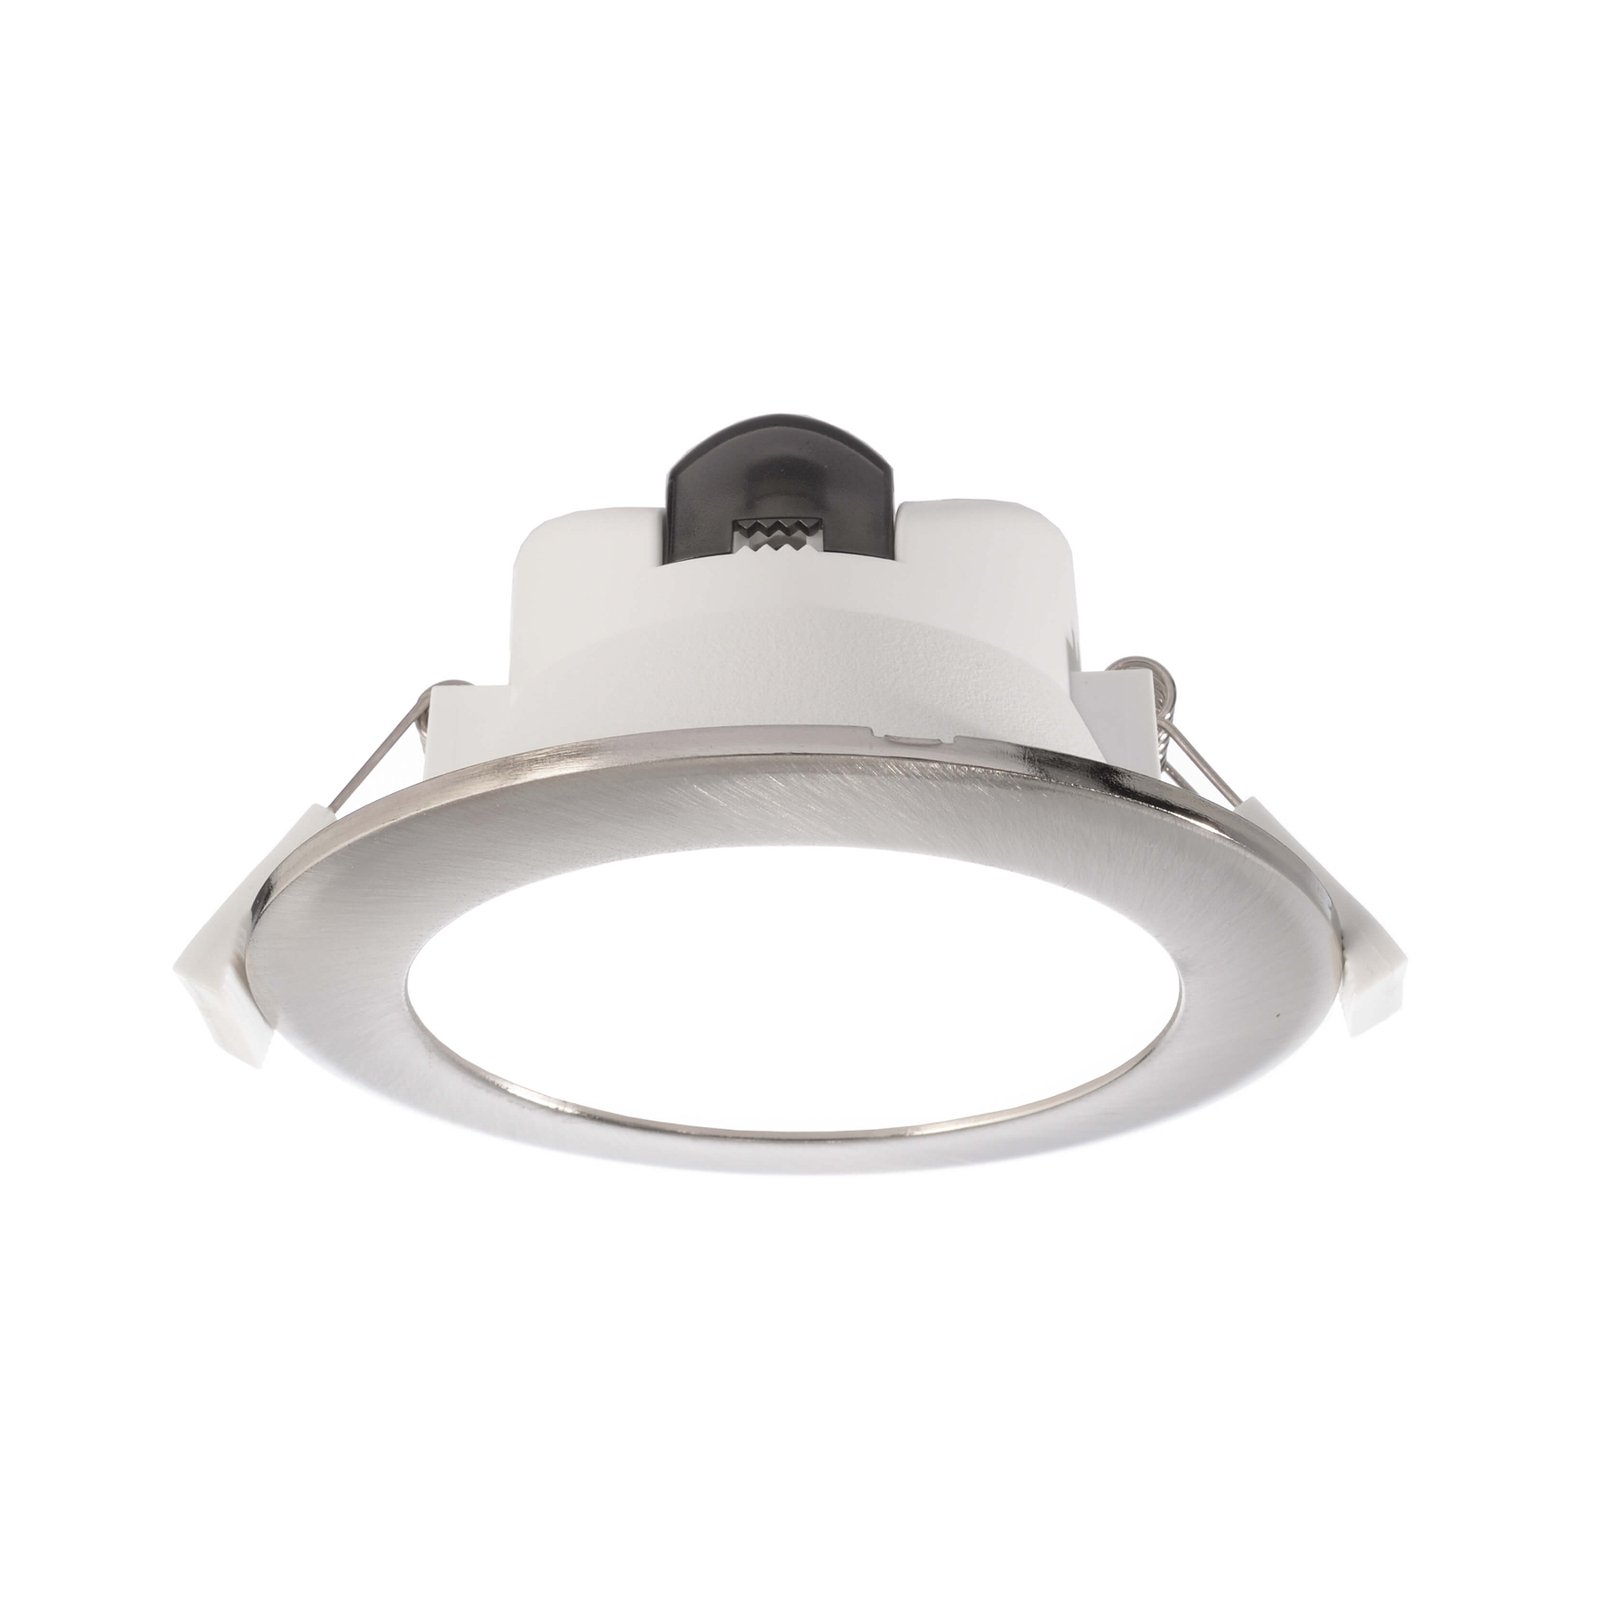 Acrux 90 LED recessed light, white, Ø 11.3 cm